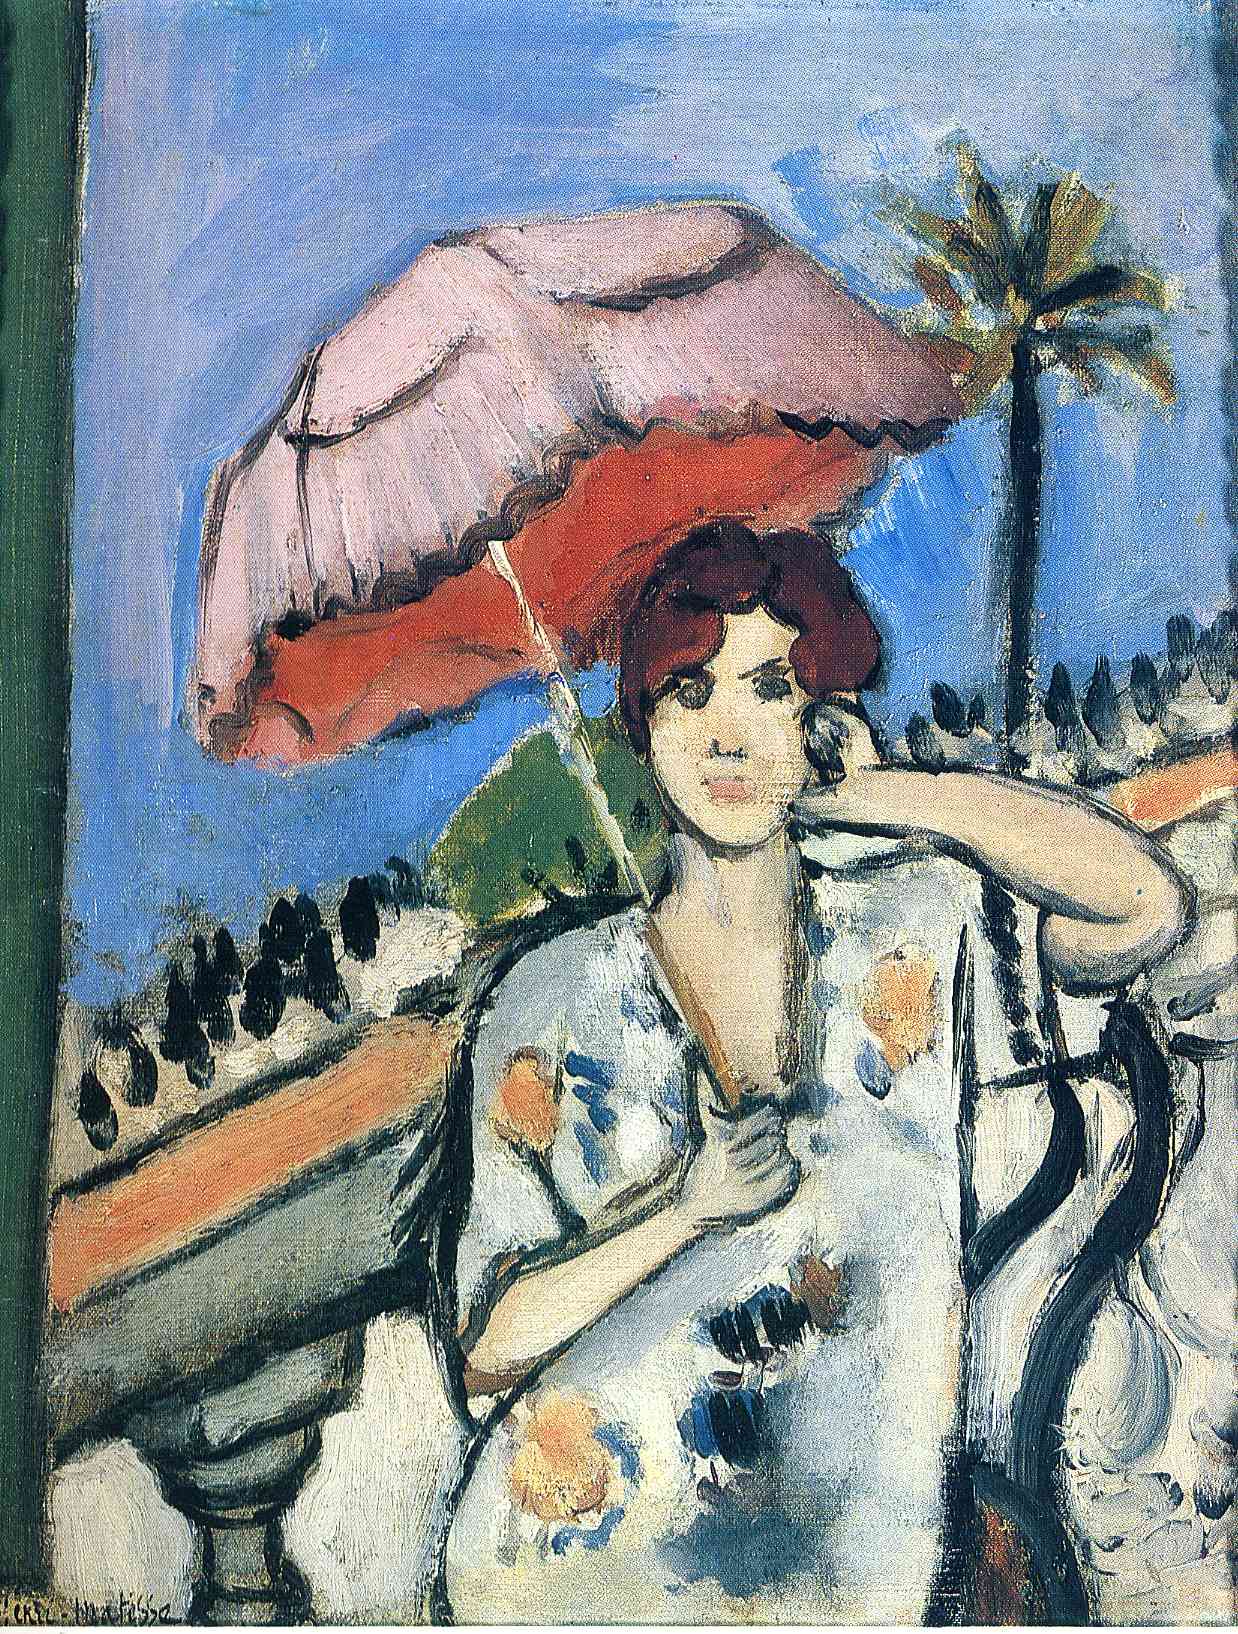 Woman with Umbrella (1920).